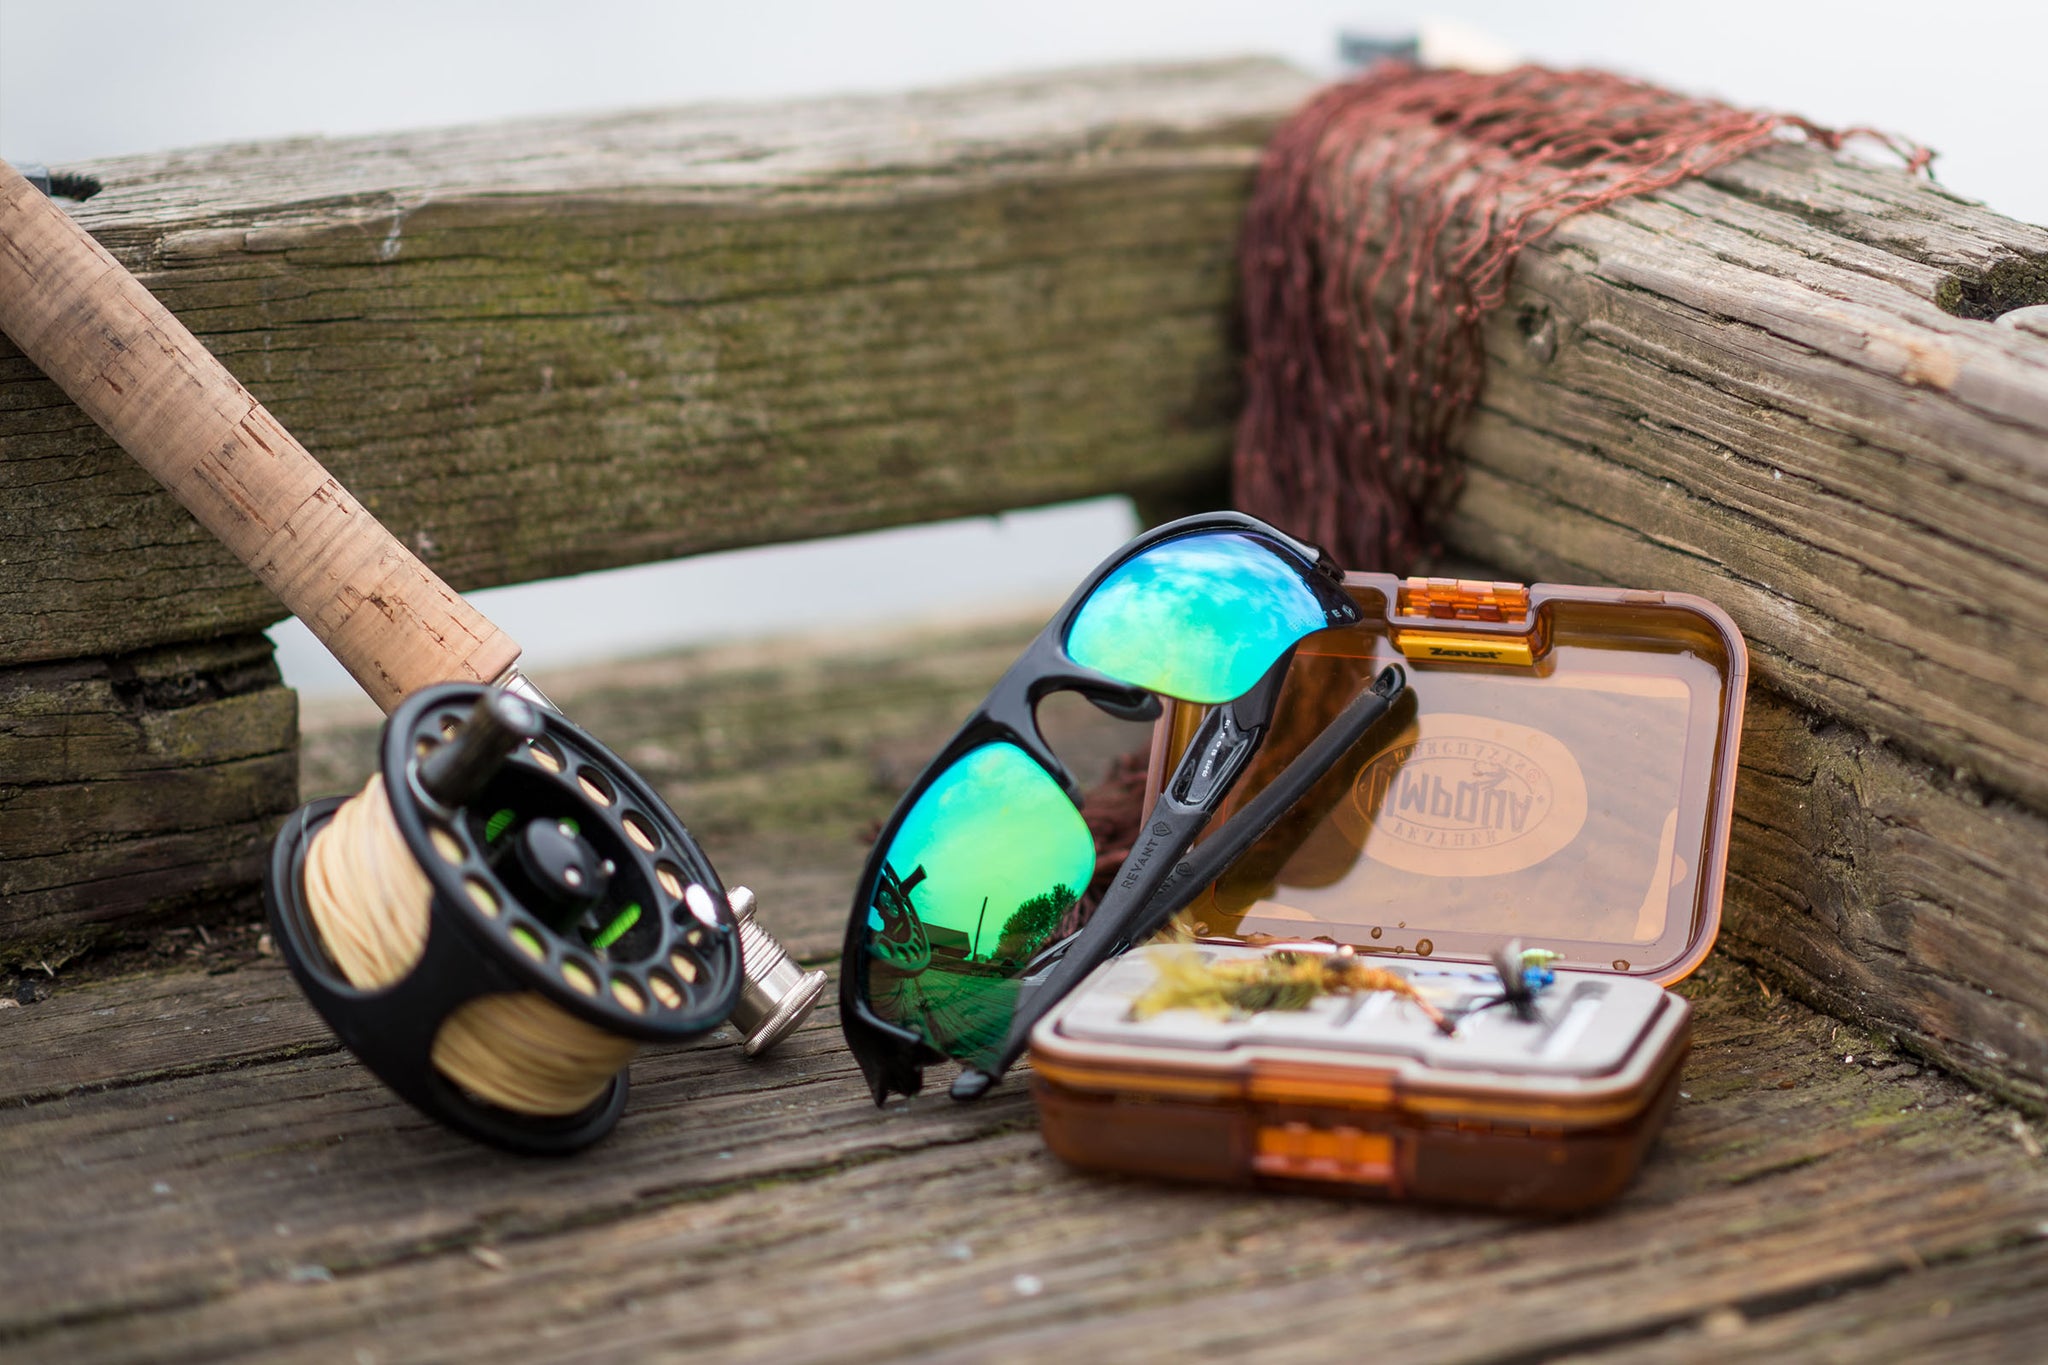 Oakley Flak Jacket XLJ sunglasses with Emerald Green lenses and fishing gear